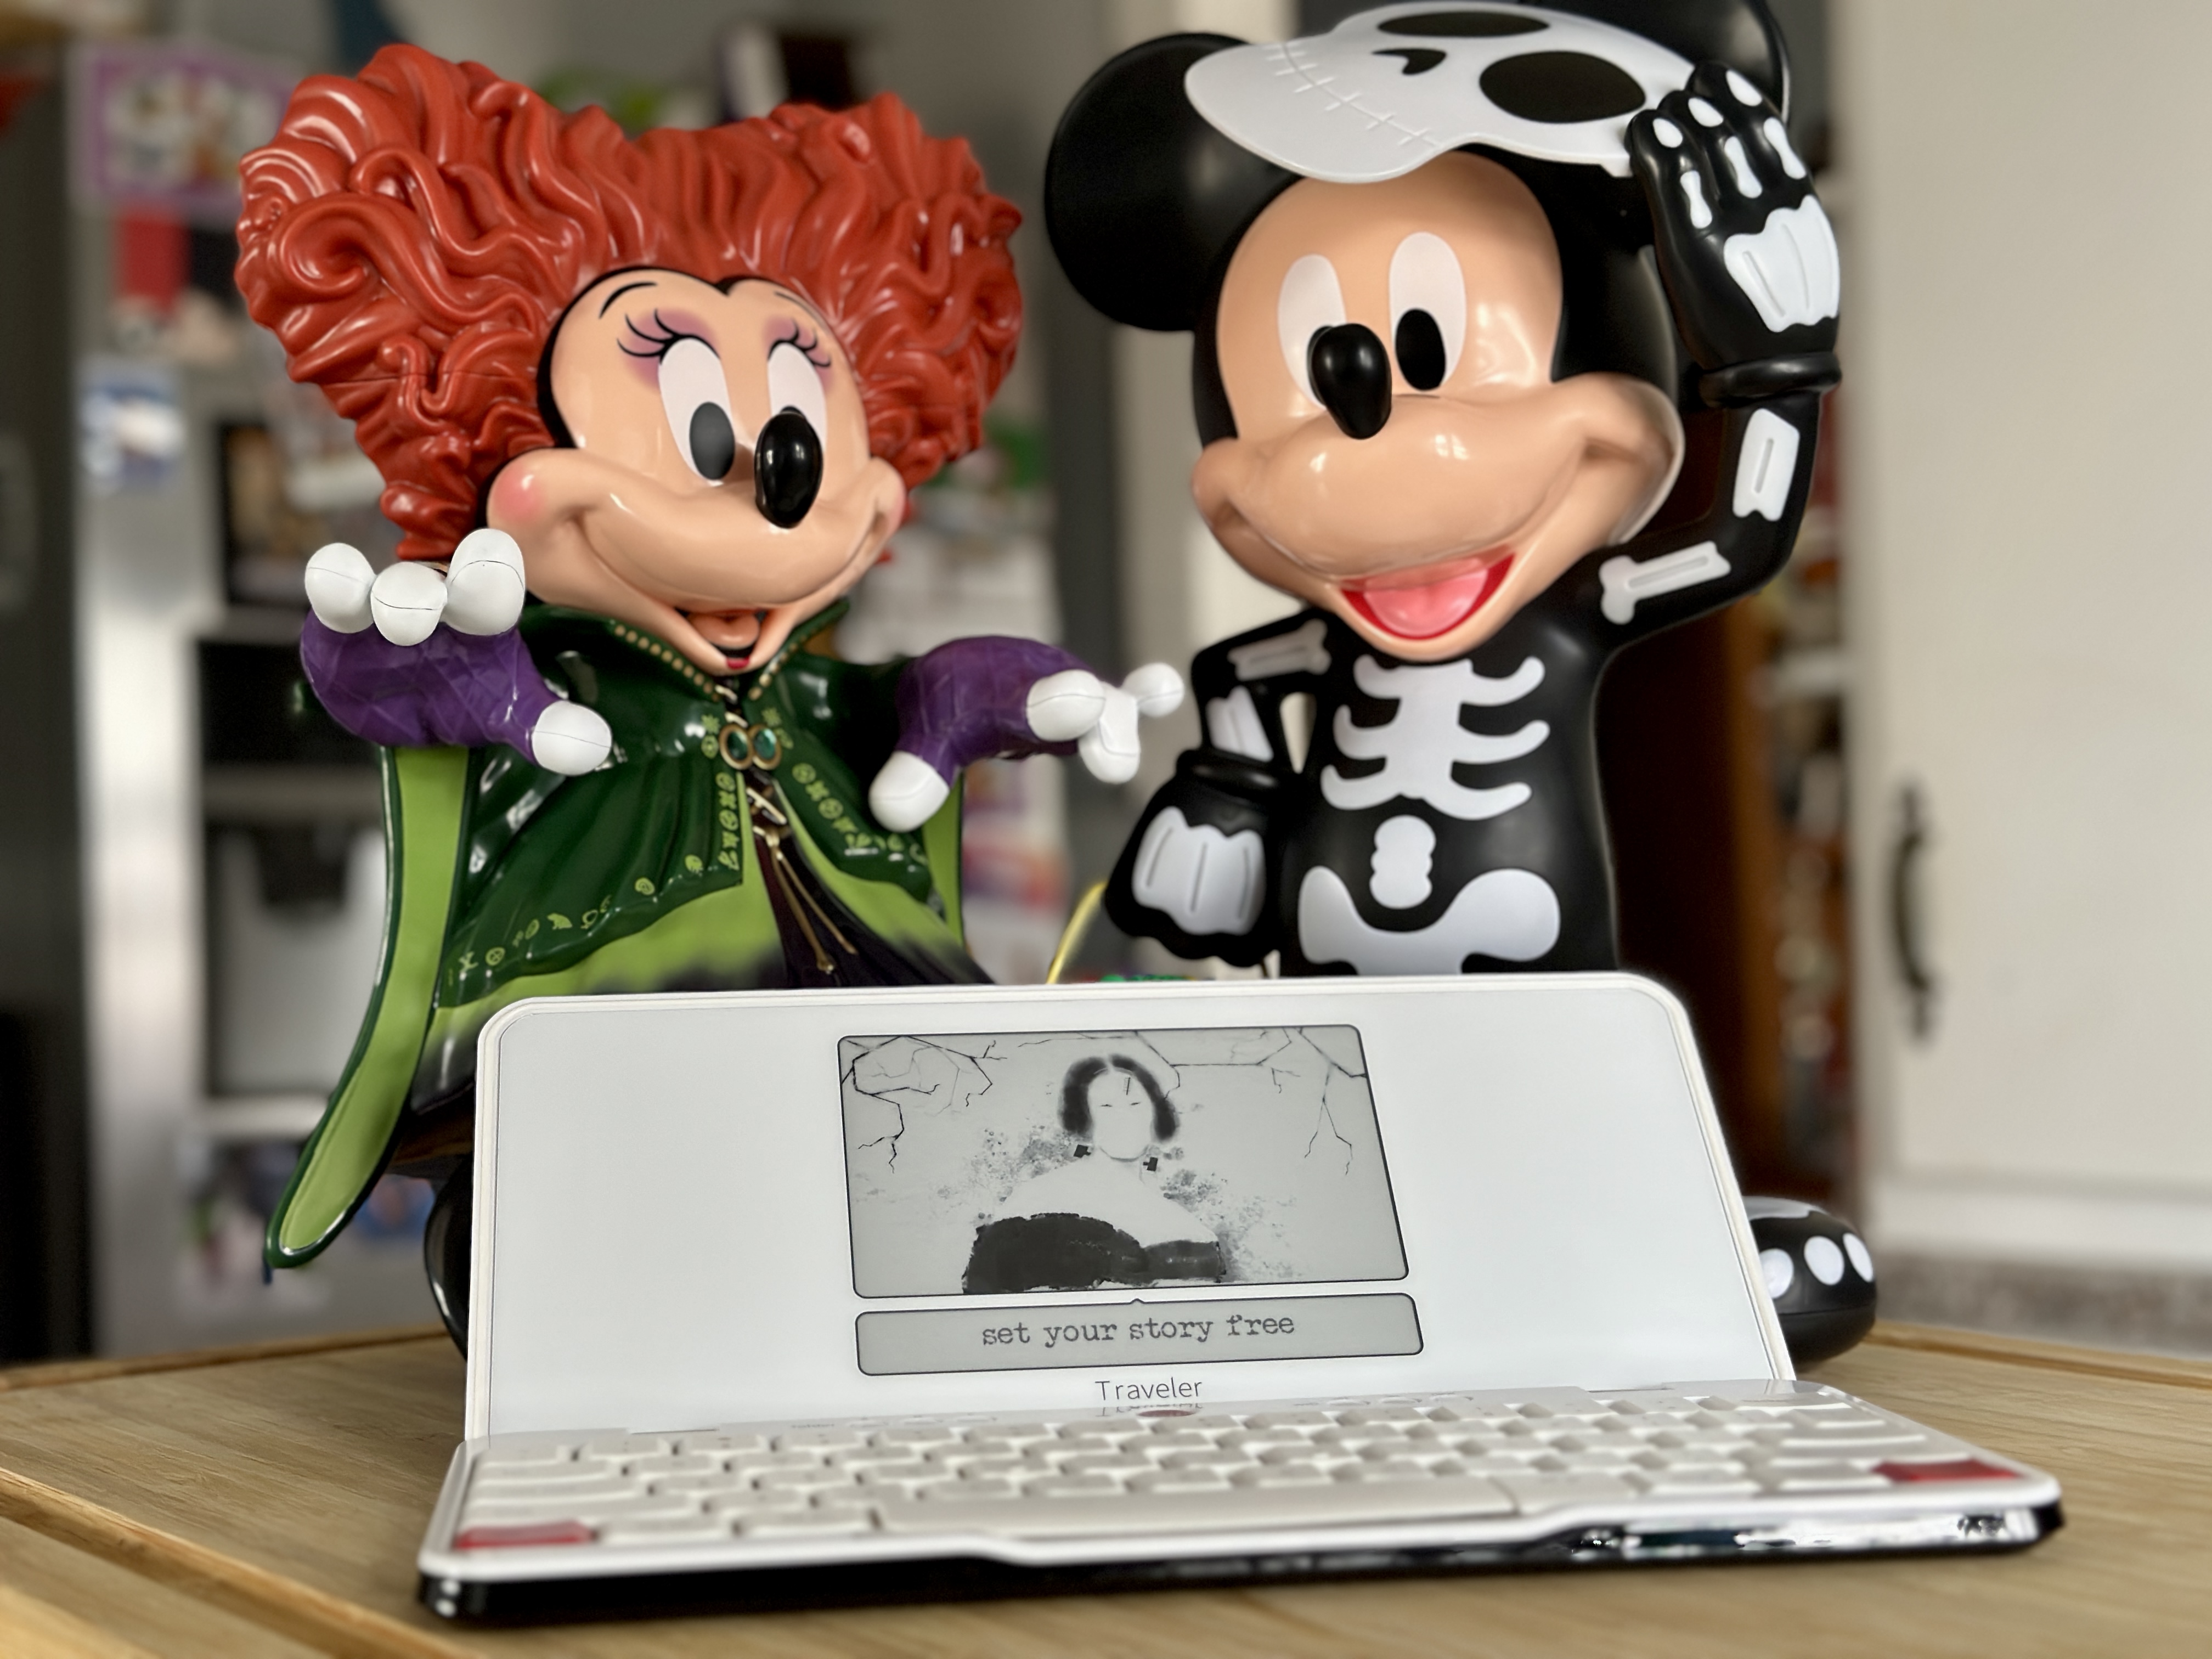 Freewrite Traveler open on screensaver with Disney Halloween figures.